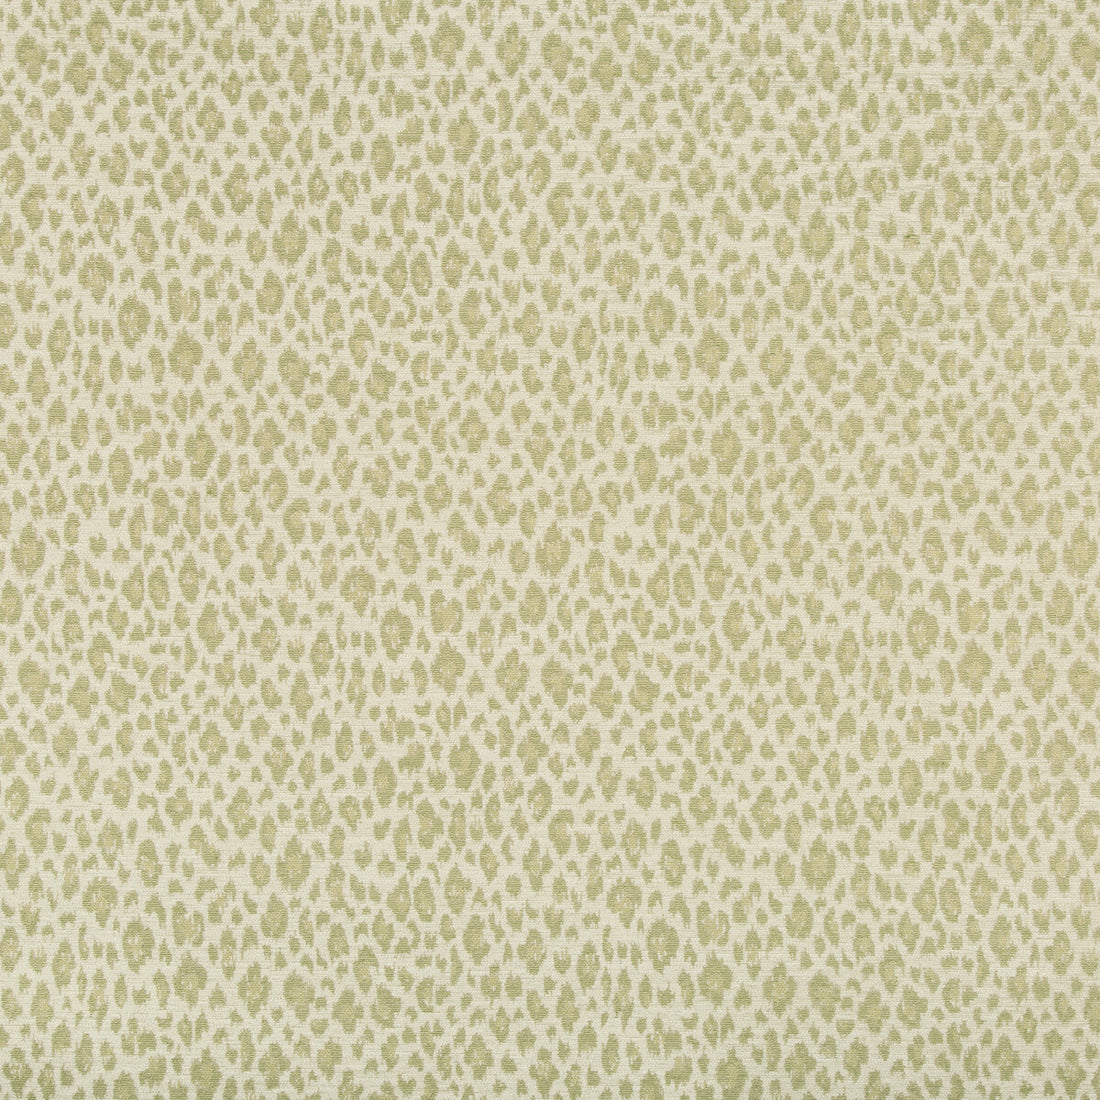 Kravet Design fabric in 31382-123 color - pattern 31382.123.0 - by Kravet Design in the Gis collection